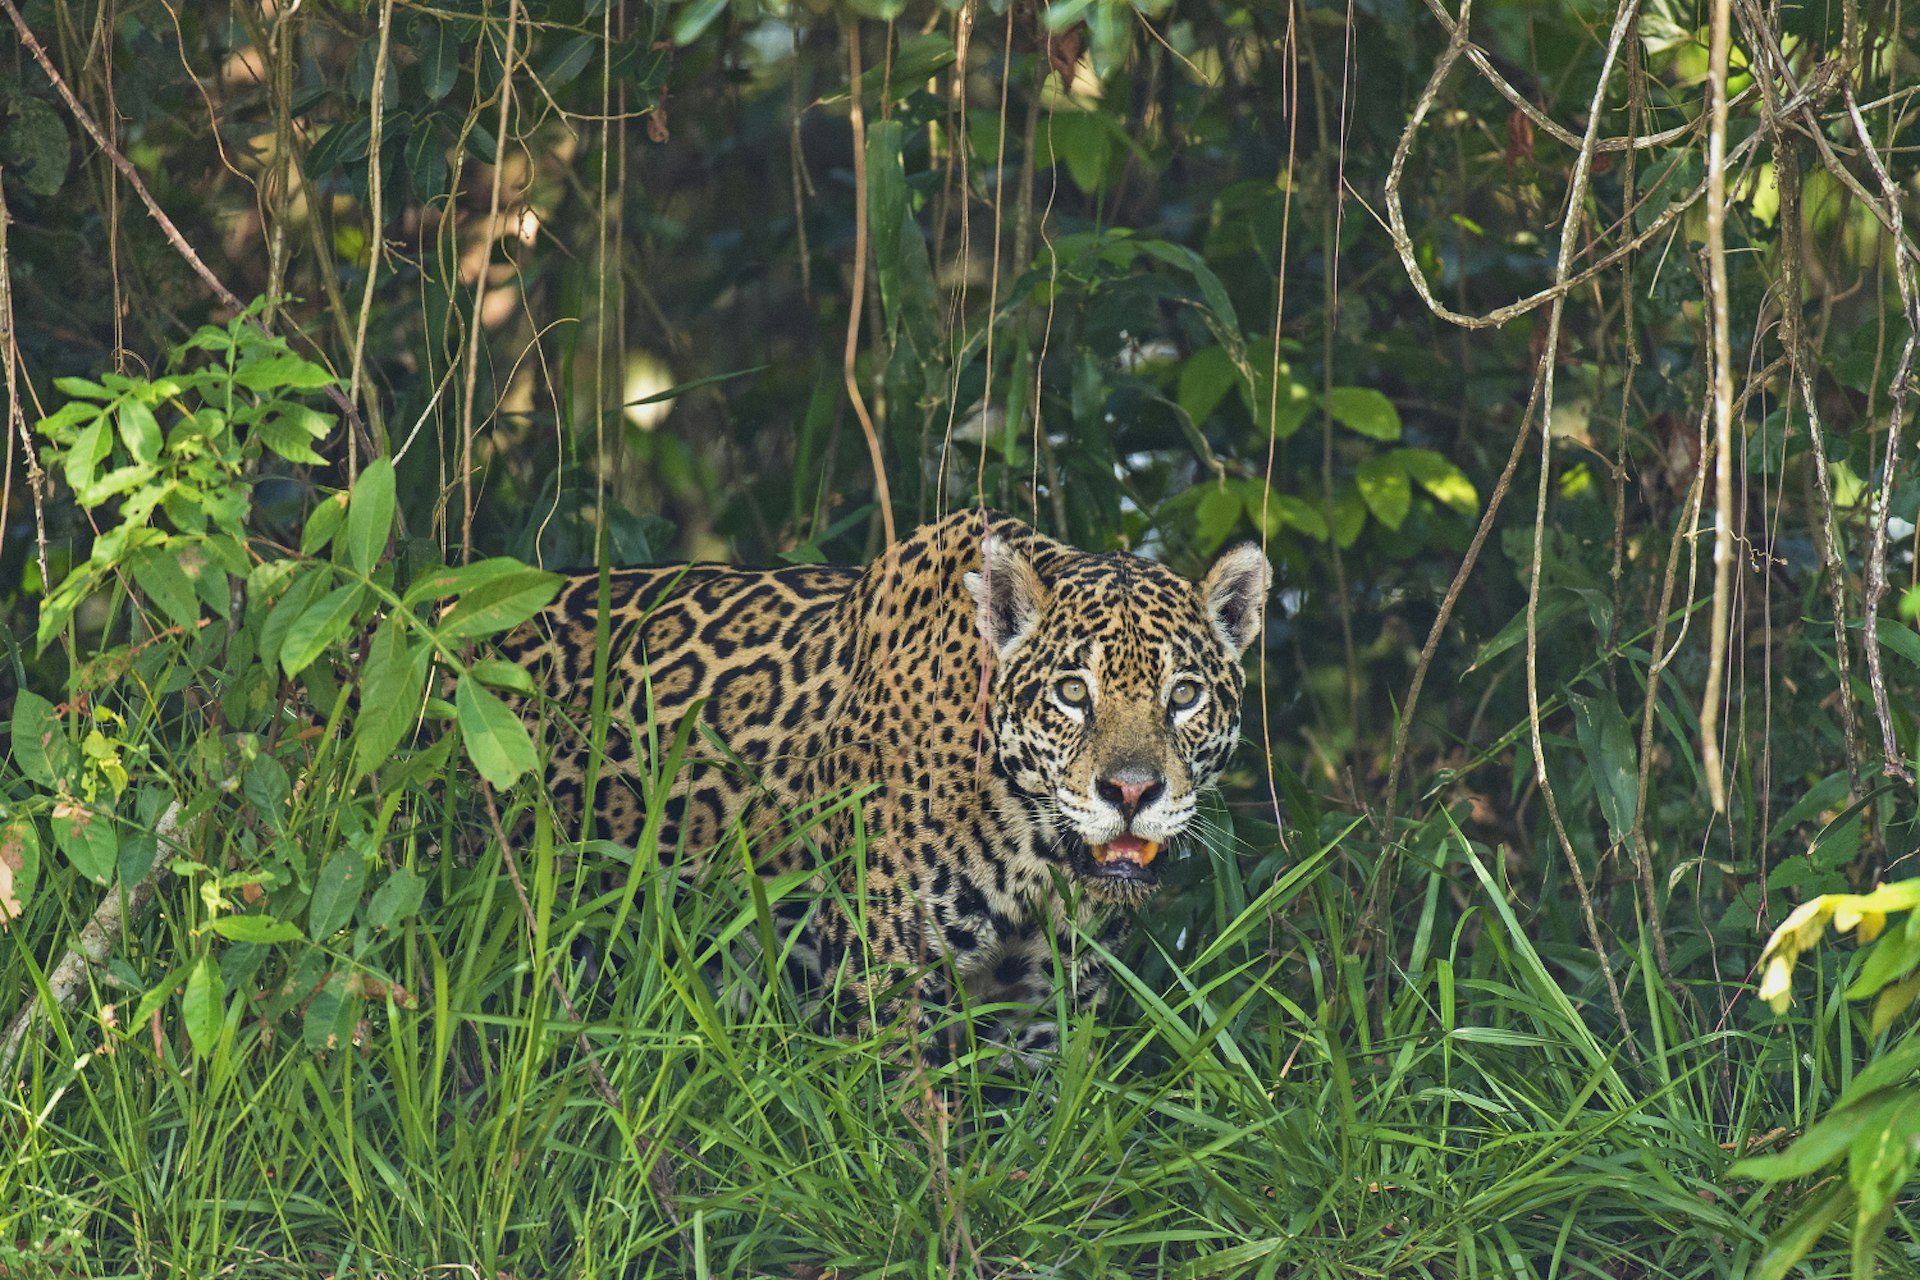 Features - Wild Jaguar walking through thick vegetation in Pantanal, Brazil